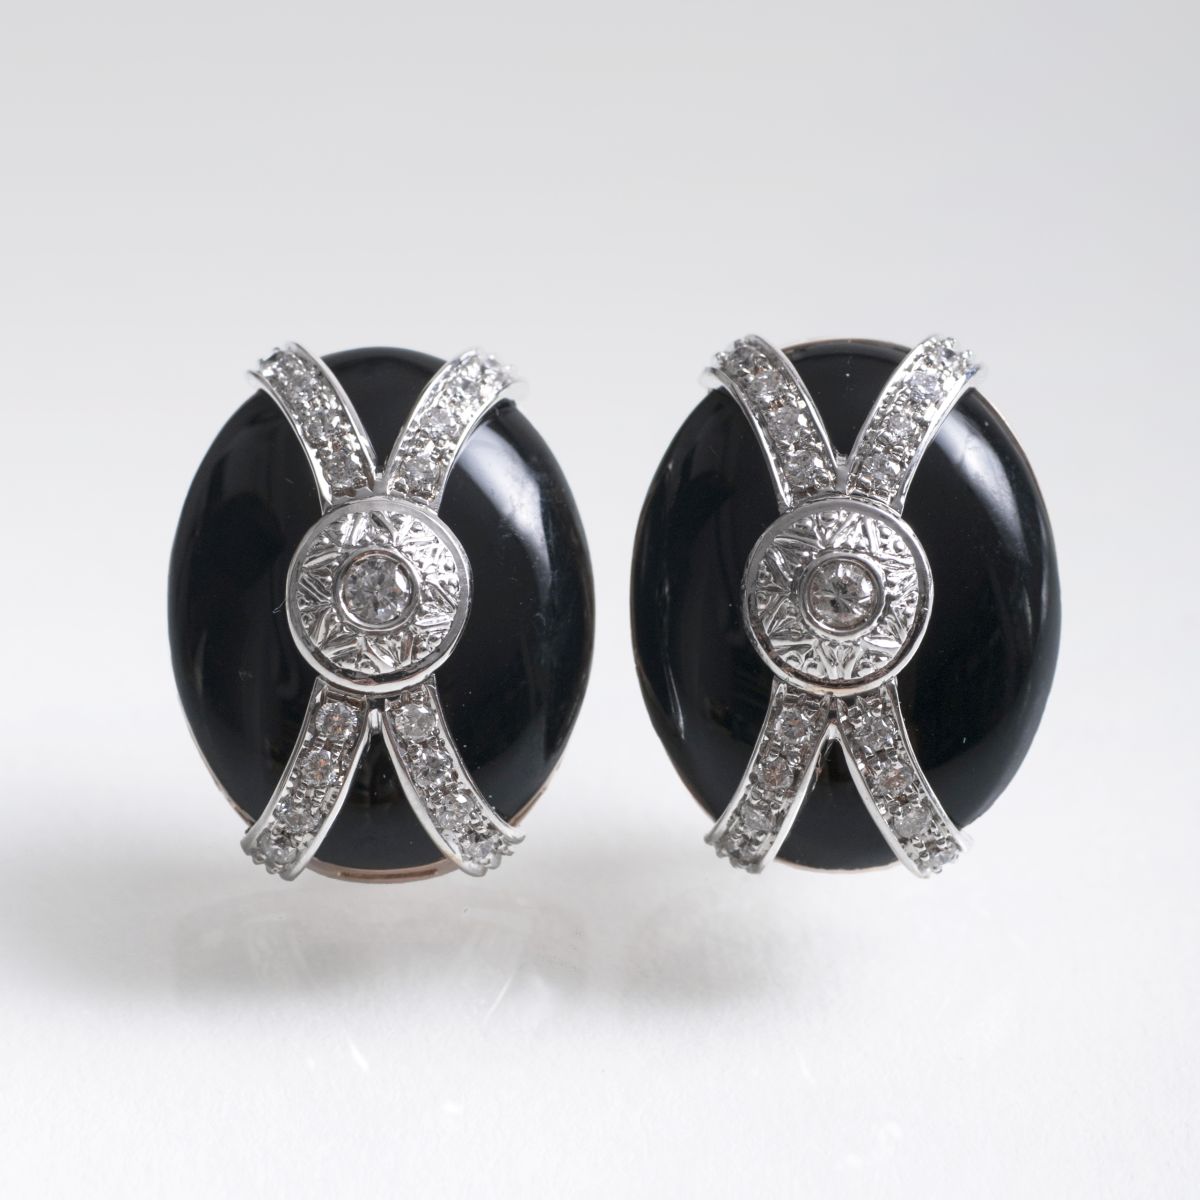 A pair of onyx diamond earrings